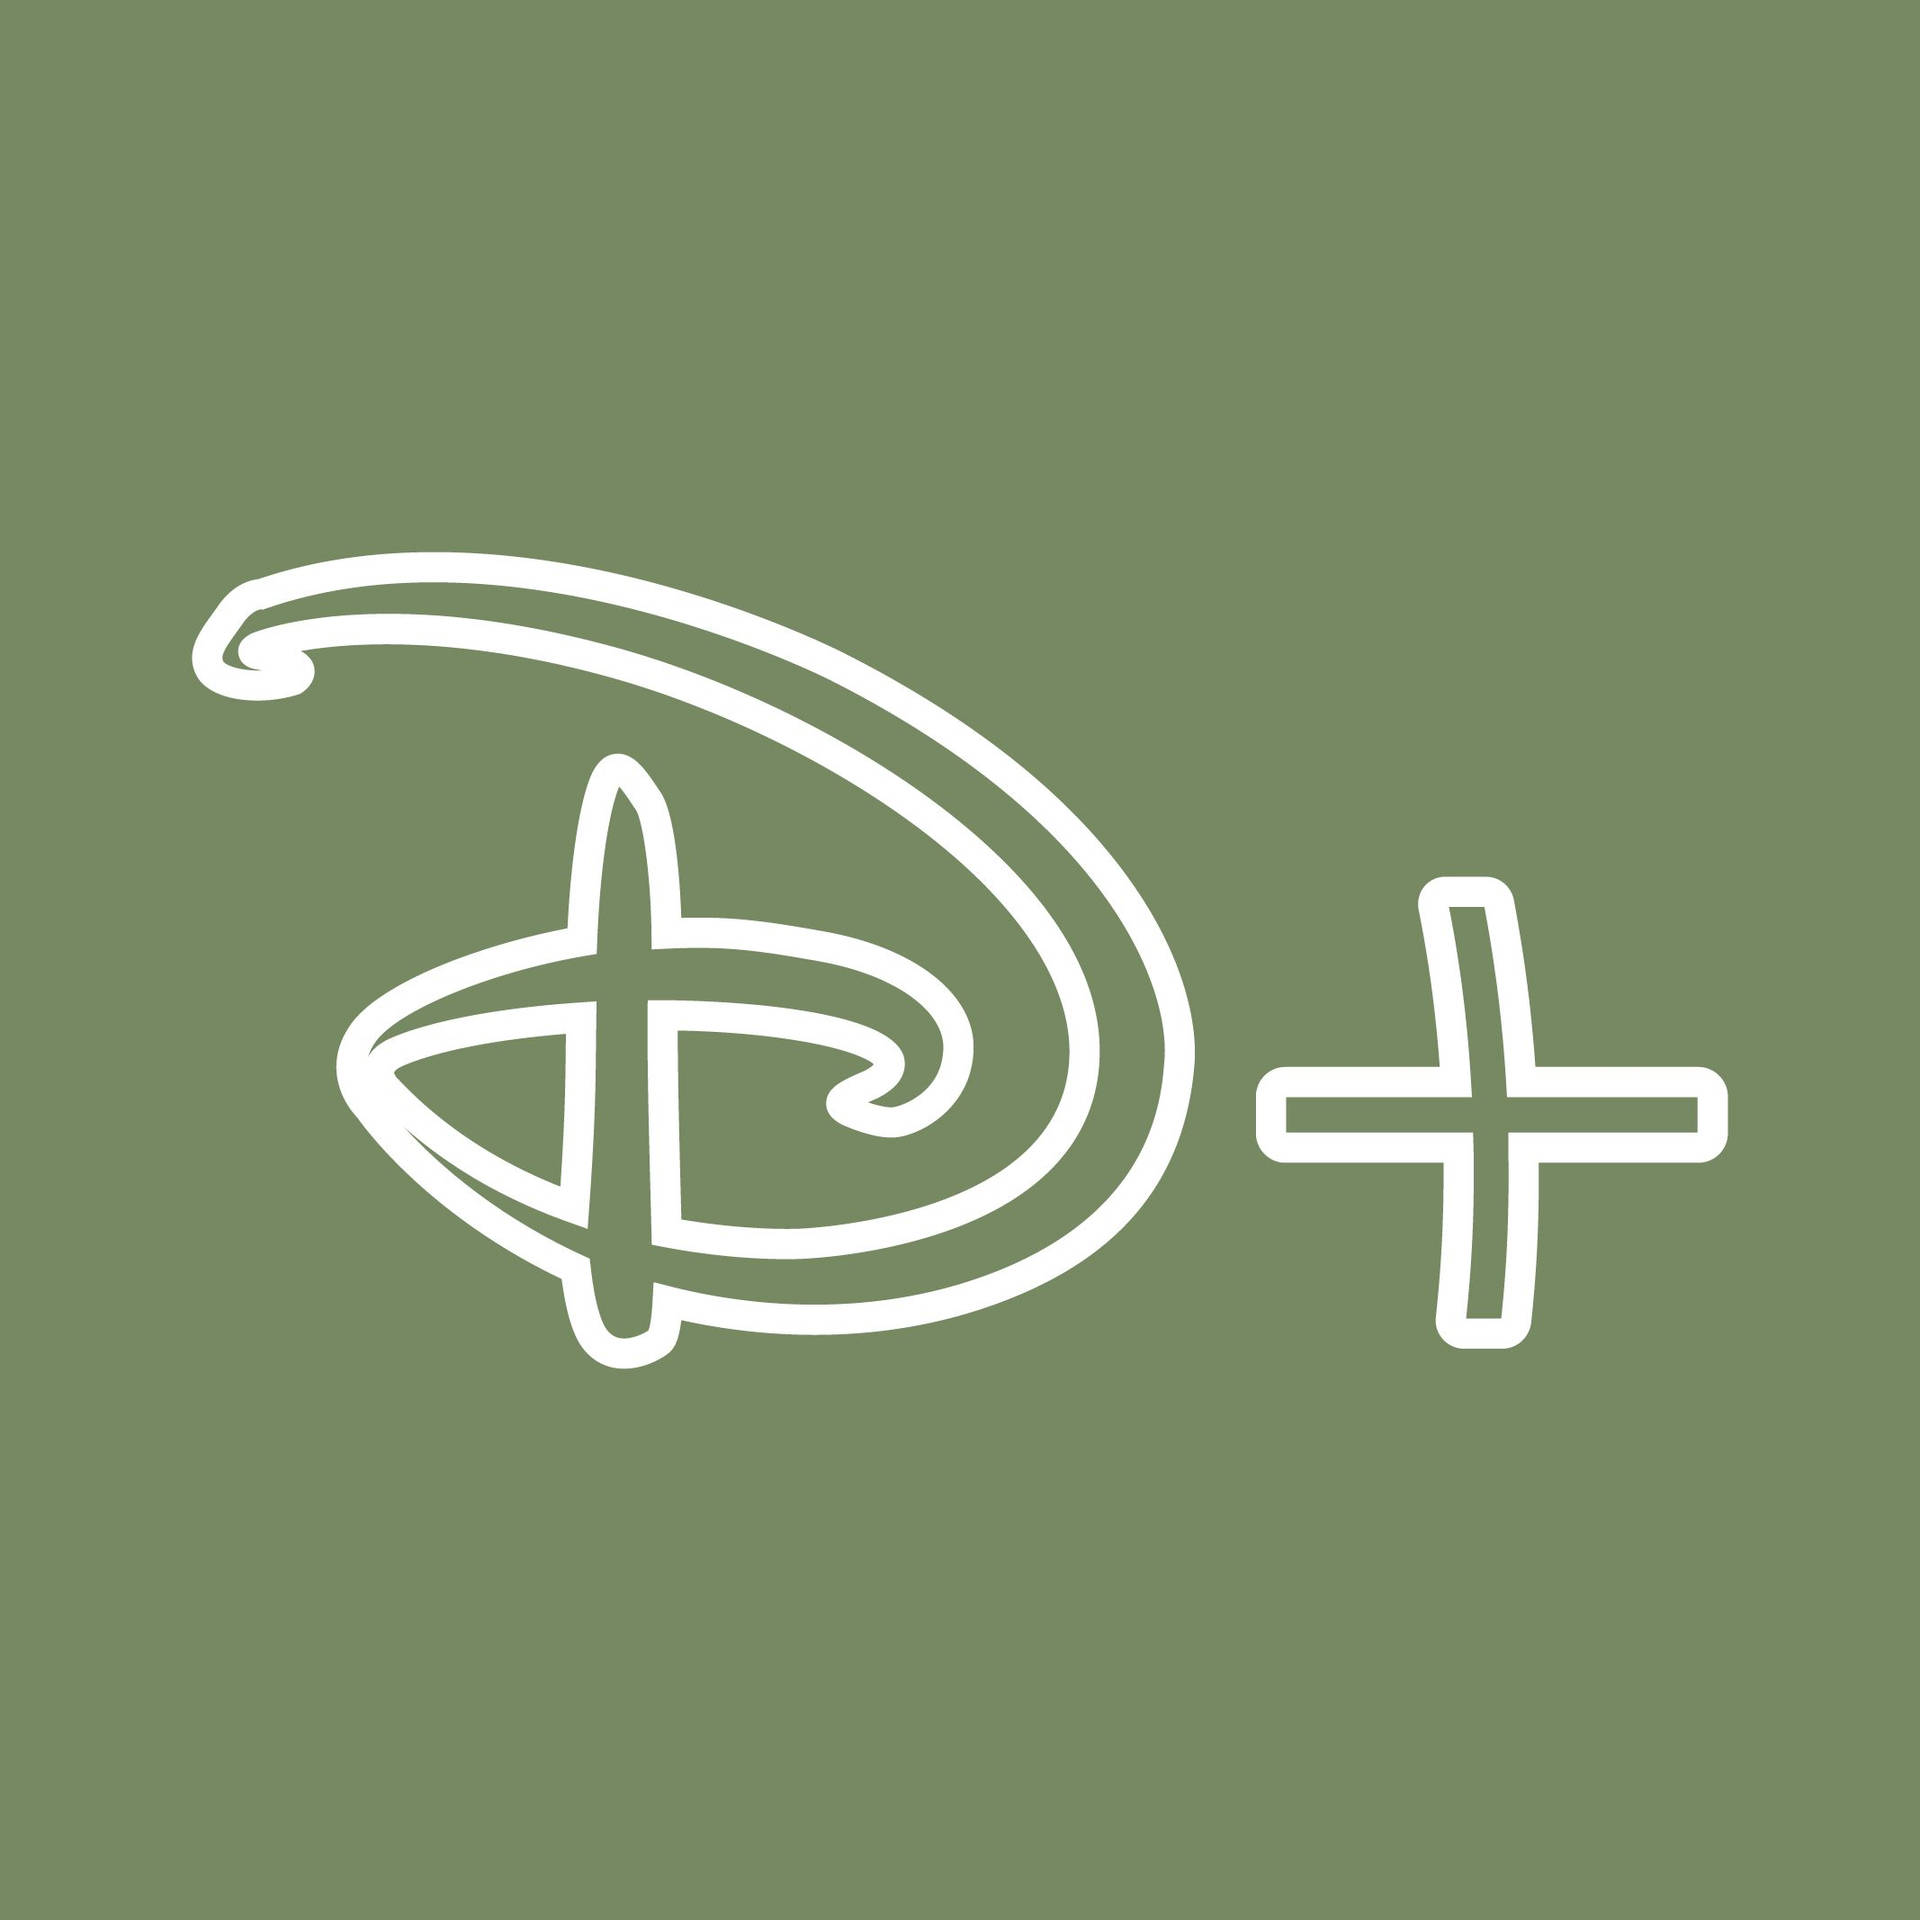 Disney Plus Pastel Green Logo Background